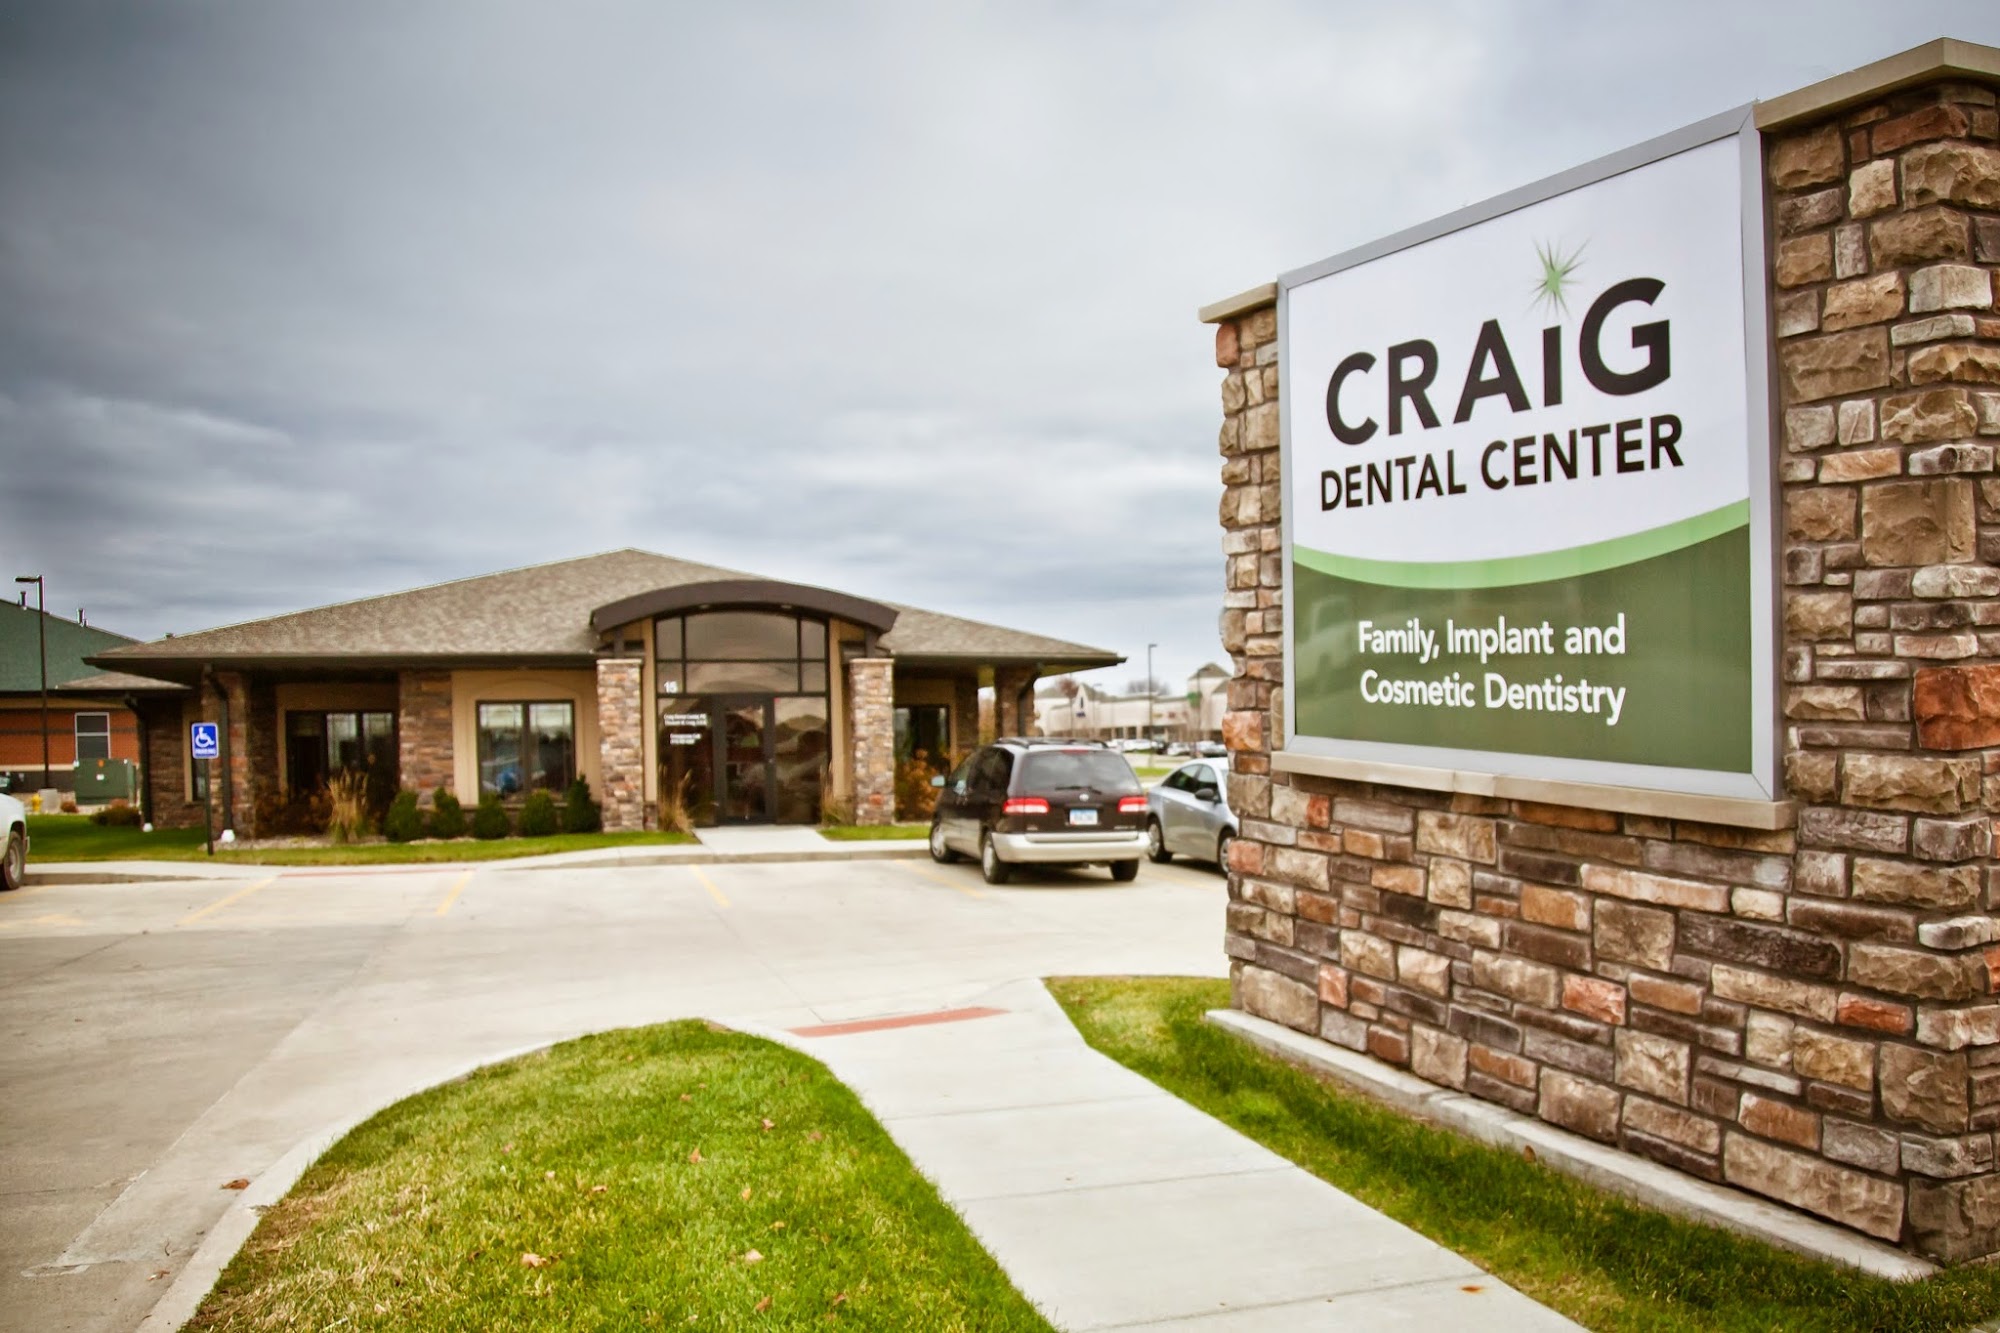 Craig Dental Center